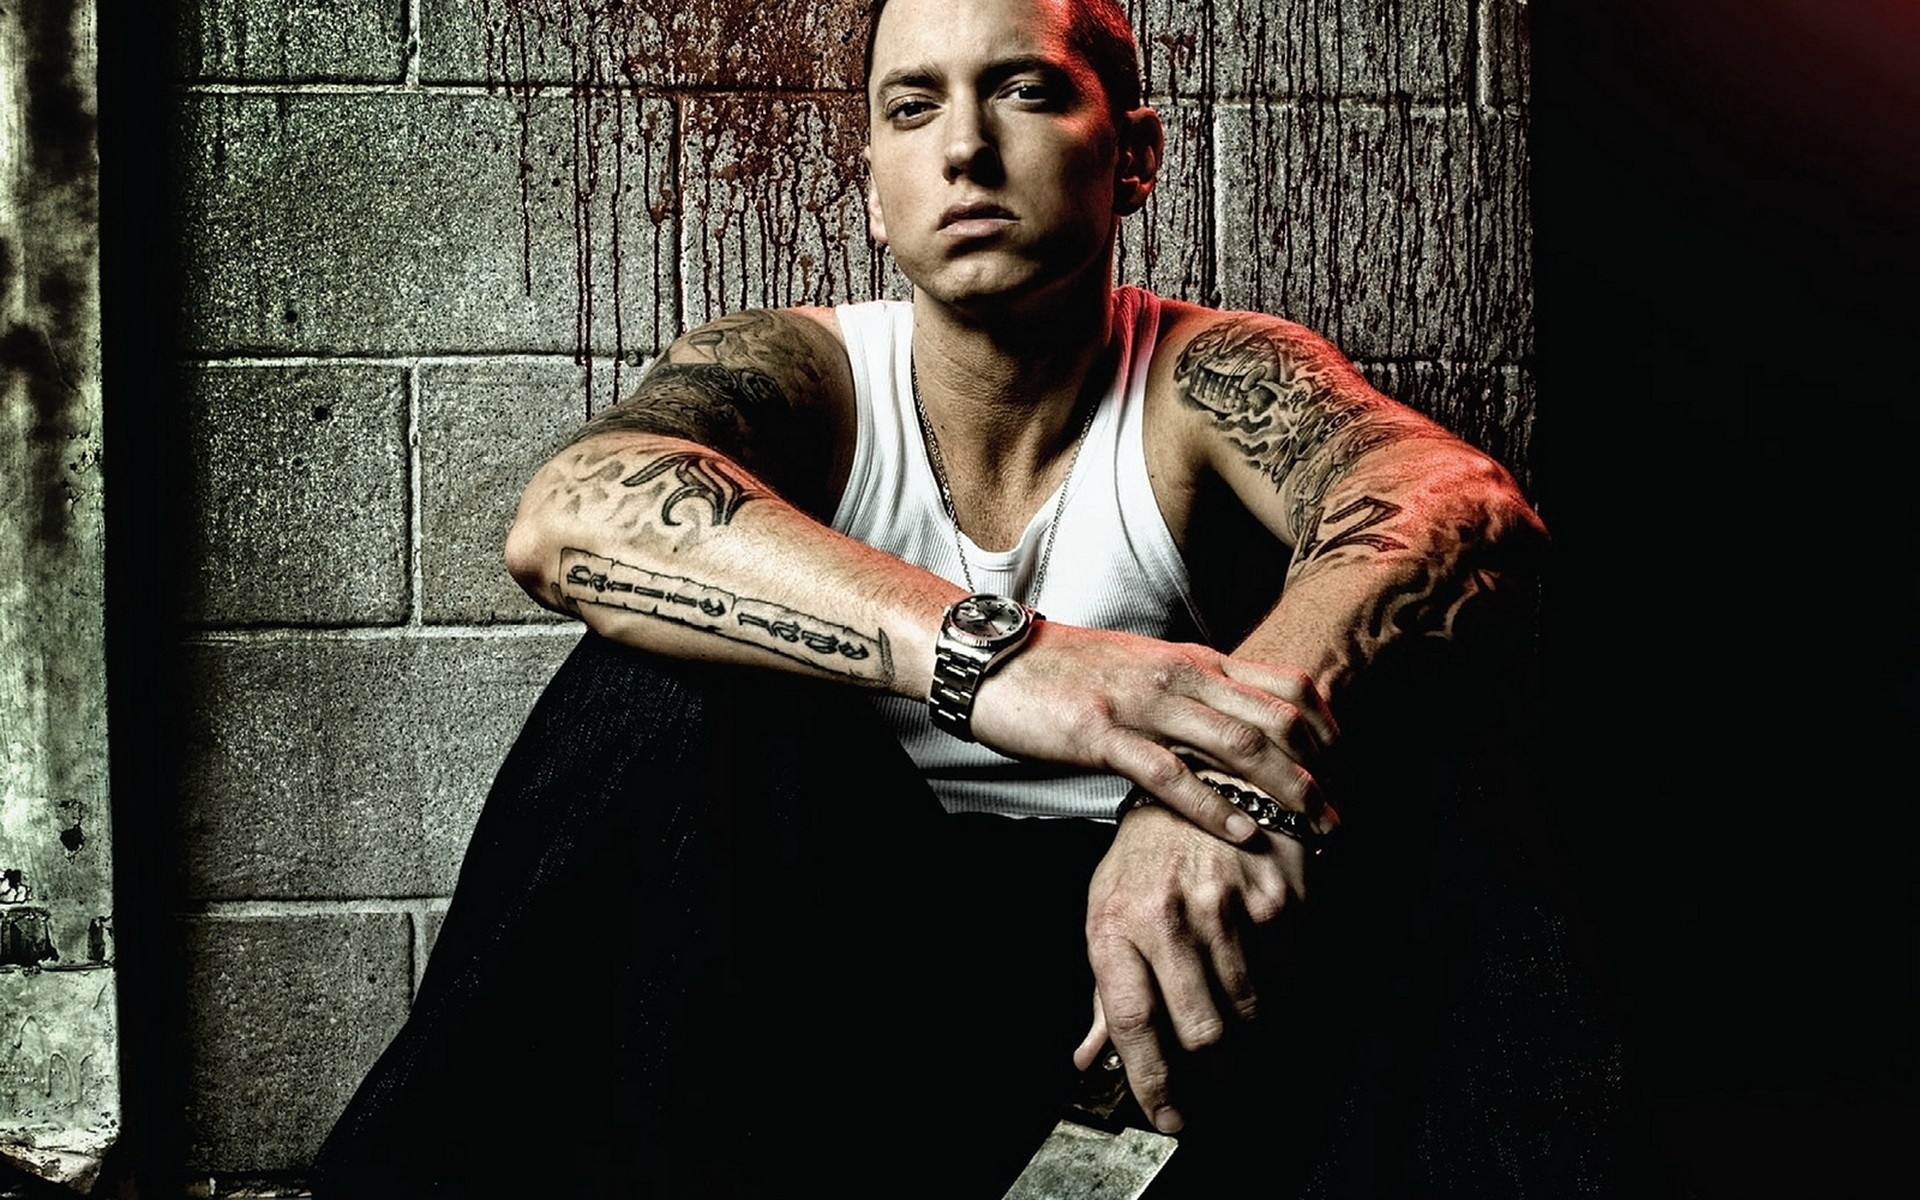 Eminem Entertainment Music Singer Musician Rapper Rap Hip Hop Urban Tattoo Men Males Blondes People Wallpapers Hd Desktop And Mobile Backgrounds